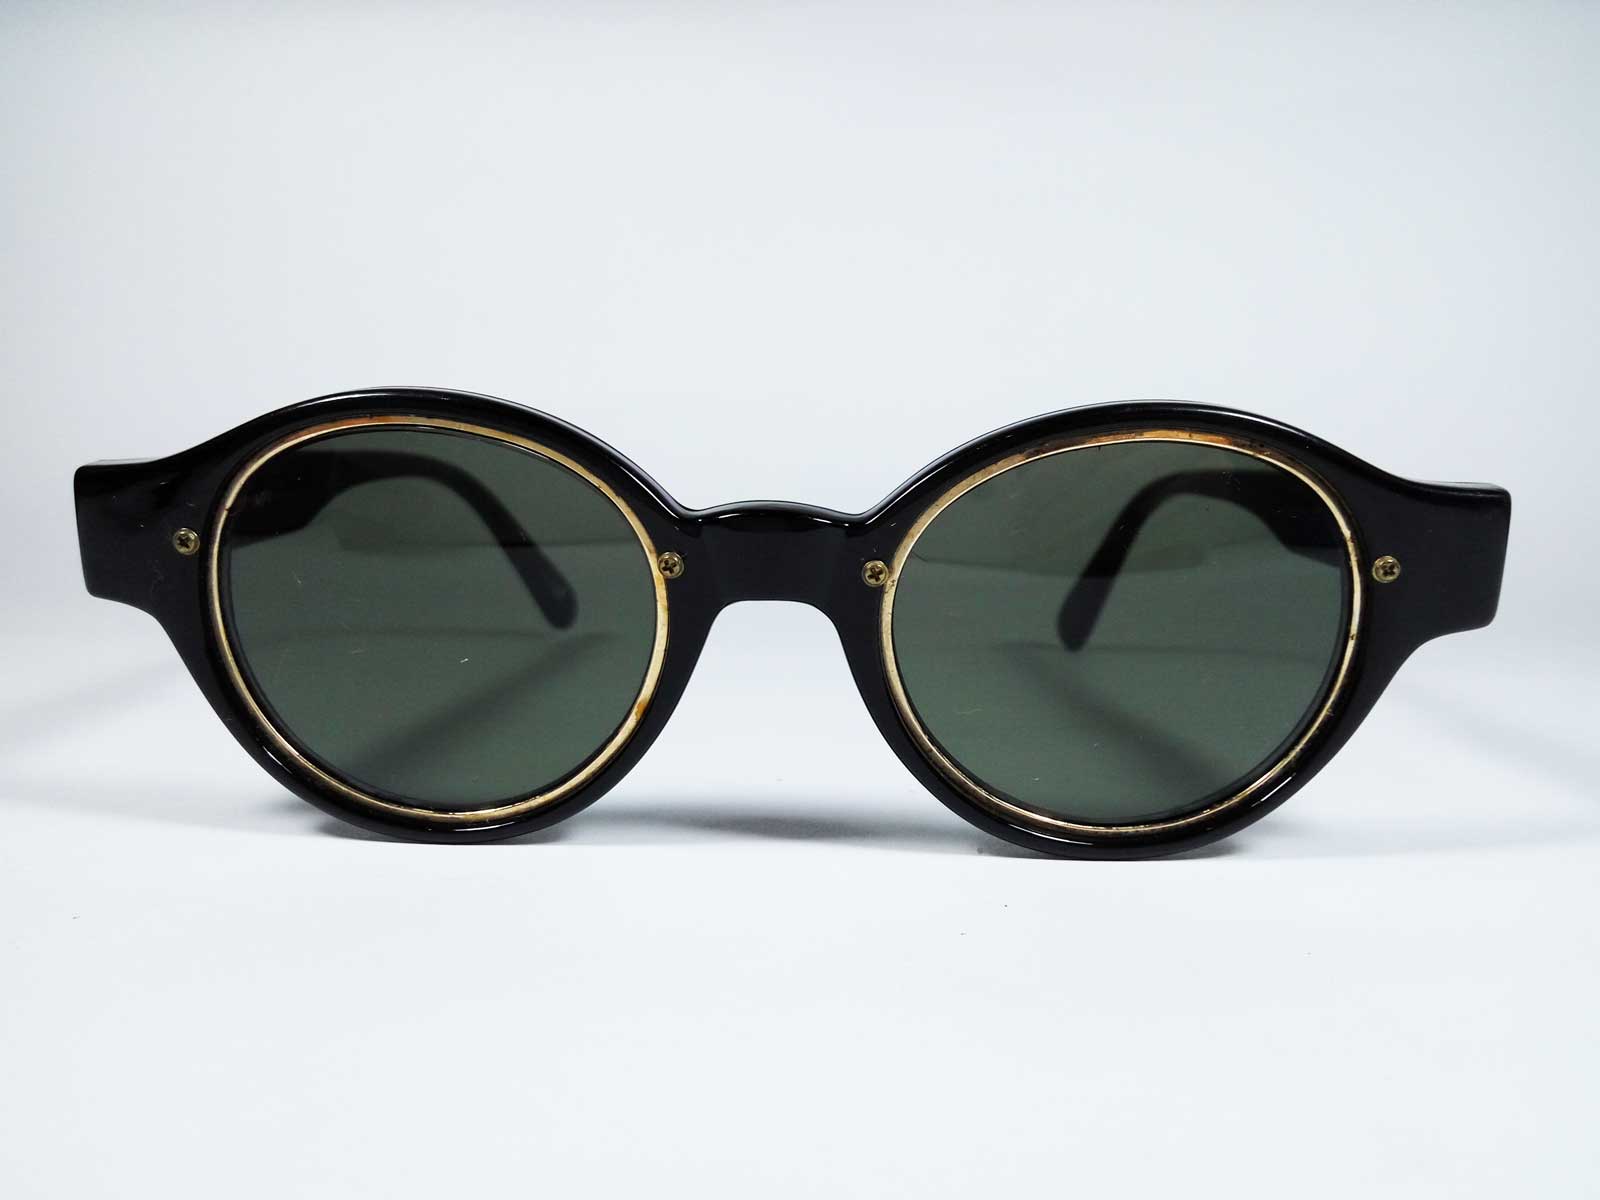  Kacamata Hitam Sunglasses Vintage Jadul Antik Original 